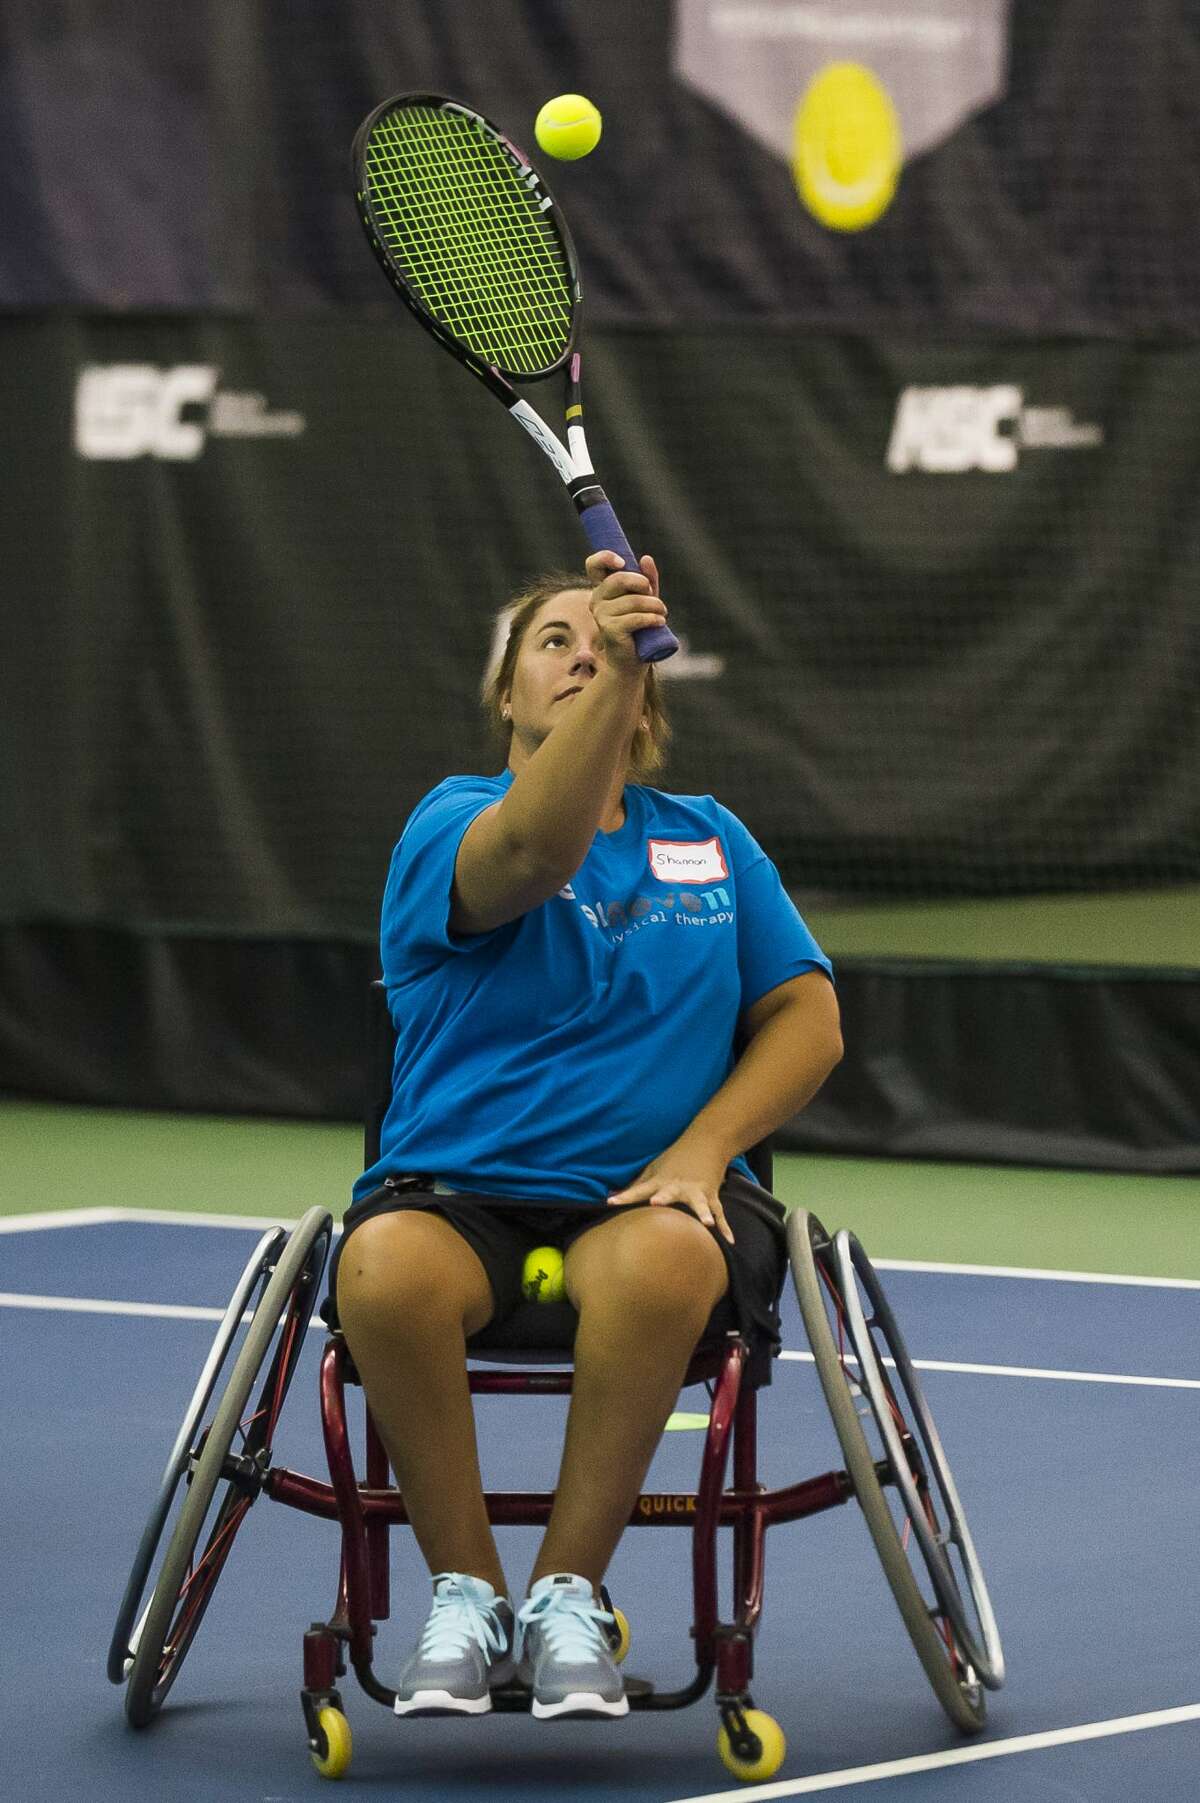 Shannon Zilska of Auburn participates in a wheelchair tennis clinic on Thursday, July 18, 2019 at Greater Midland Tennis Center. (Katy Kildee/kkildee@mdn.net)